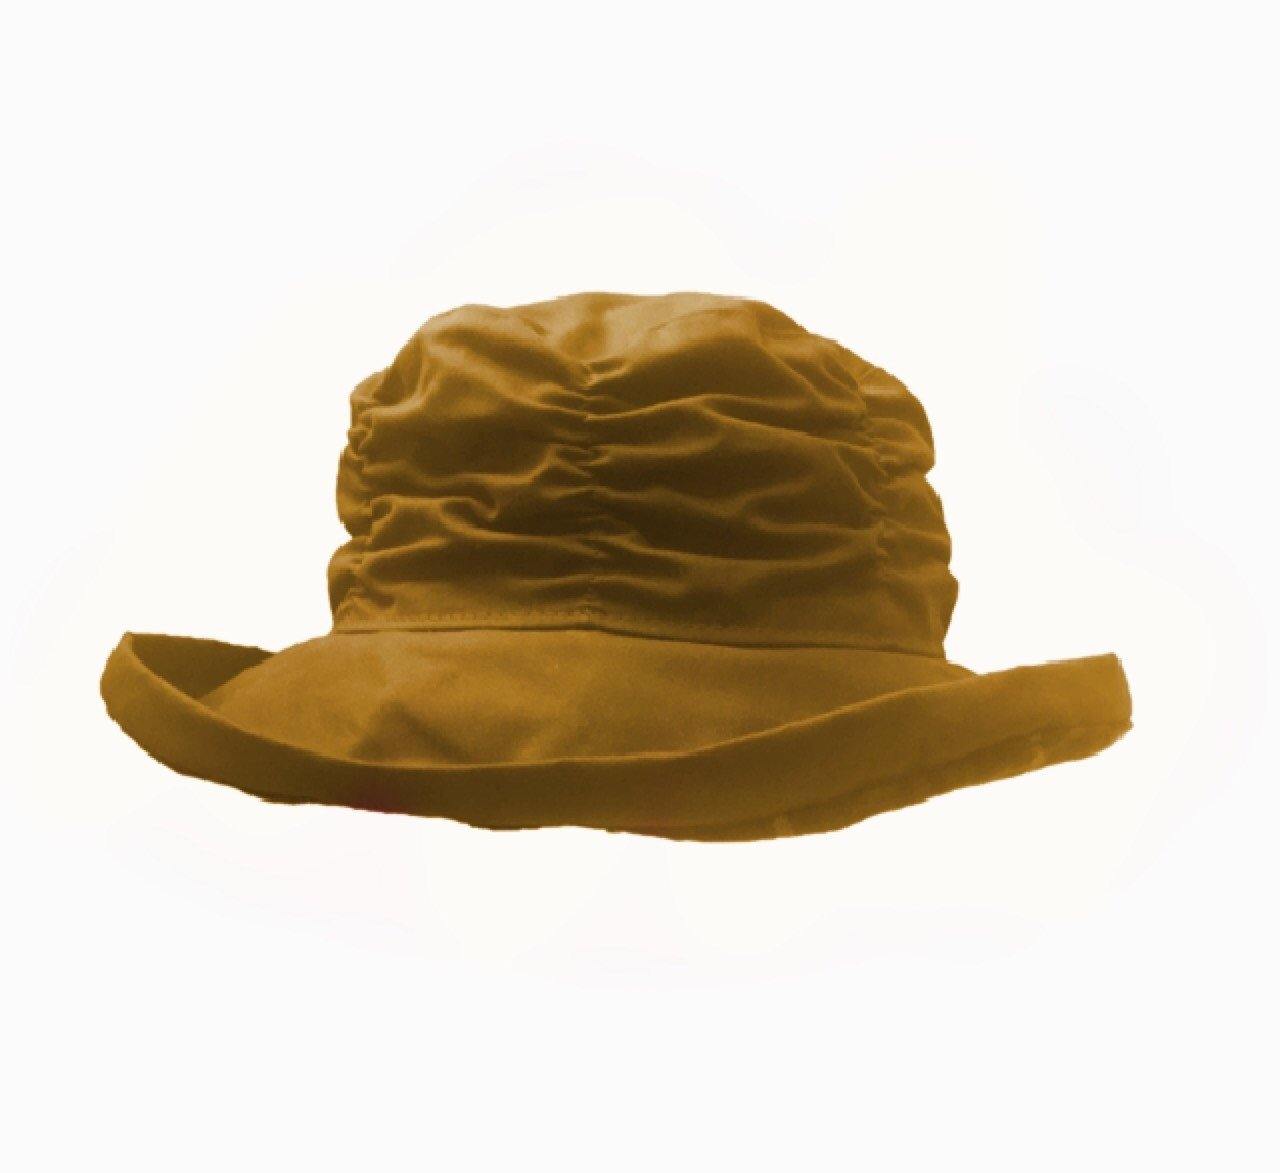 Waterproof Flat Pack Rain Hat, Wax Cotton Women's hat Made in UK - Free Life's Love